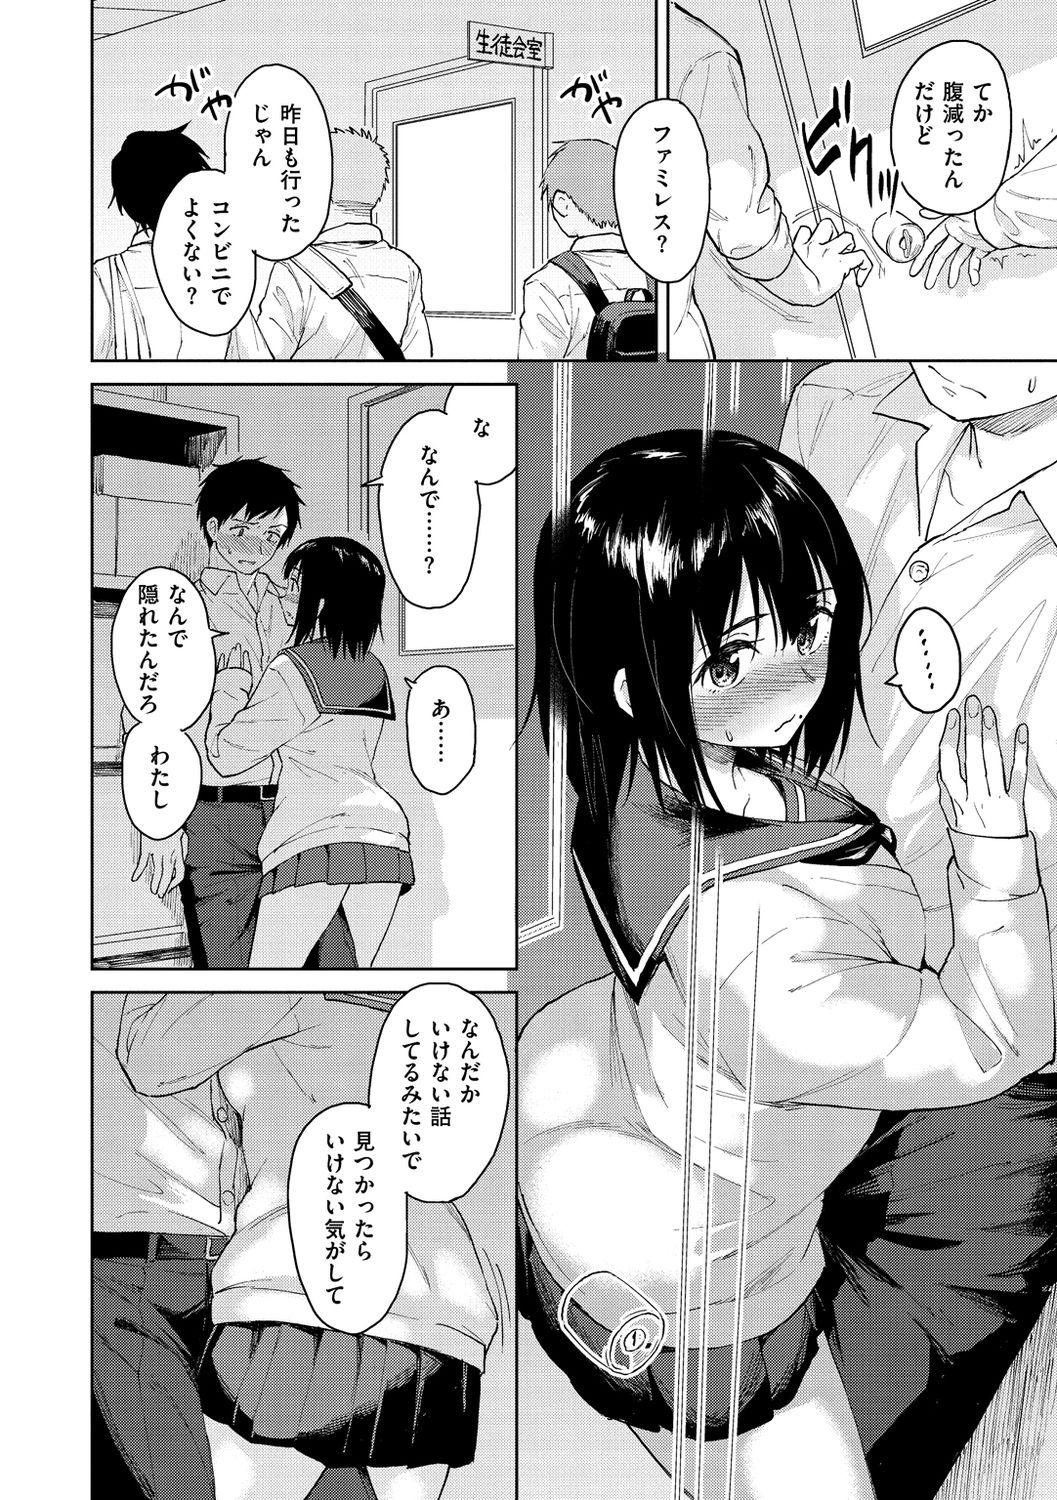 Prostituta Houkago wa Bouken no Jikan - Time for libido after school Piercings - Page 10